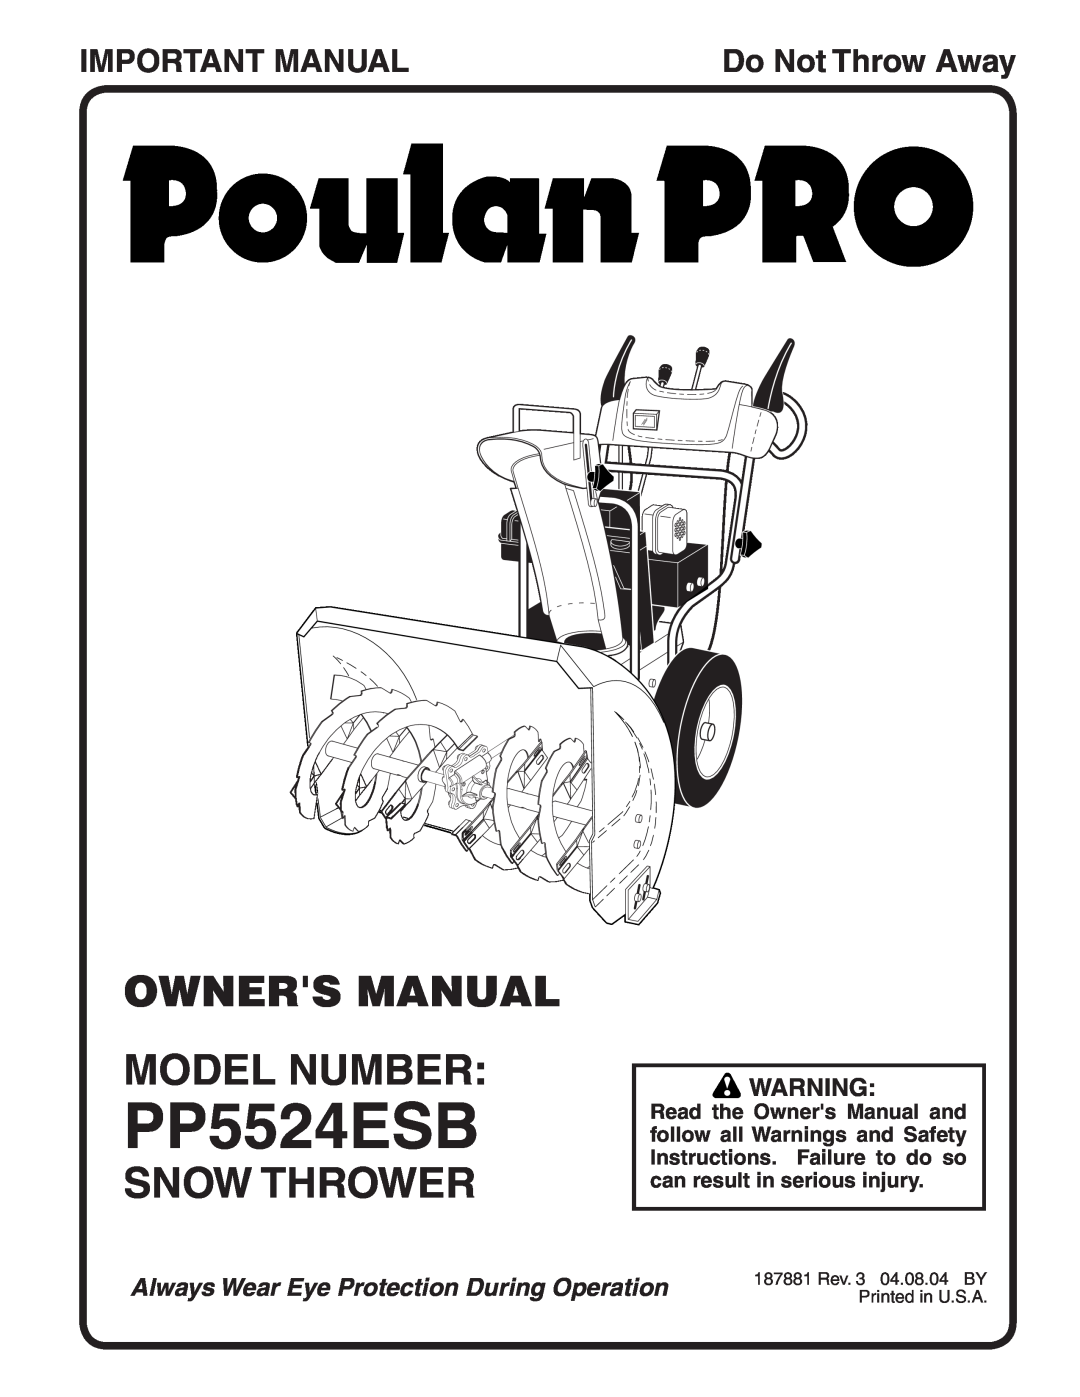 Poulan PP5524ESB owner manual Snow Thrower, Important Manual, Do Not Throw Away 